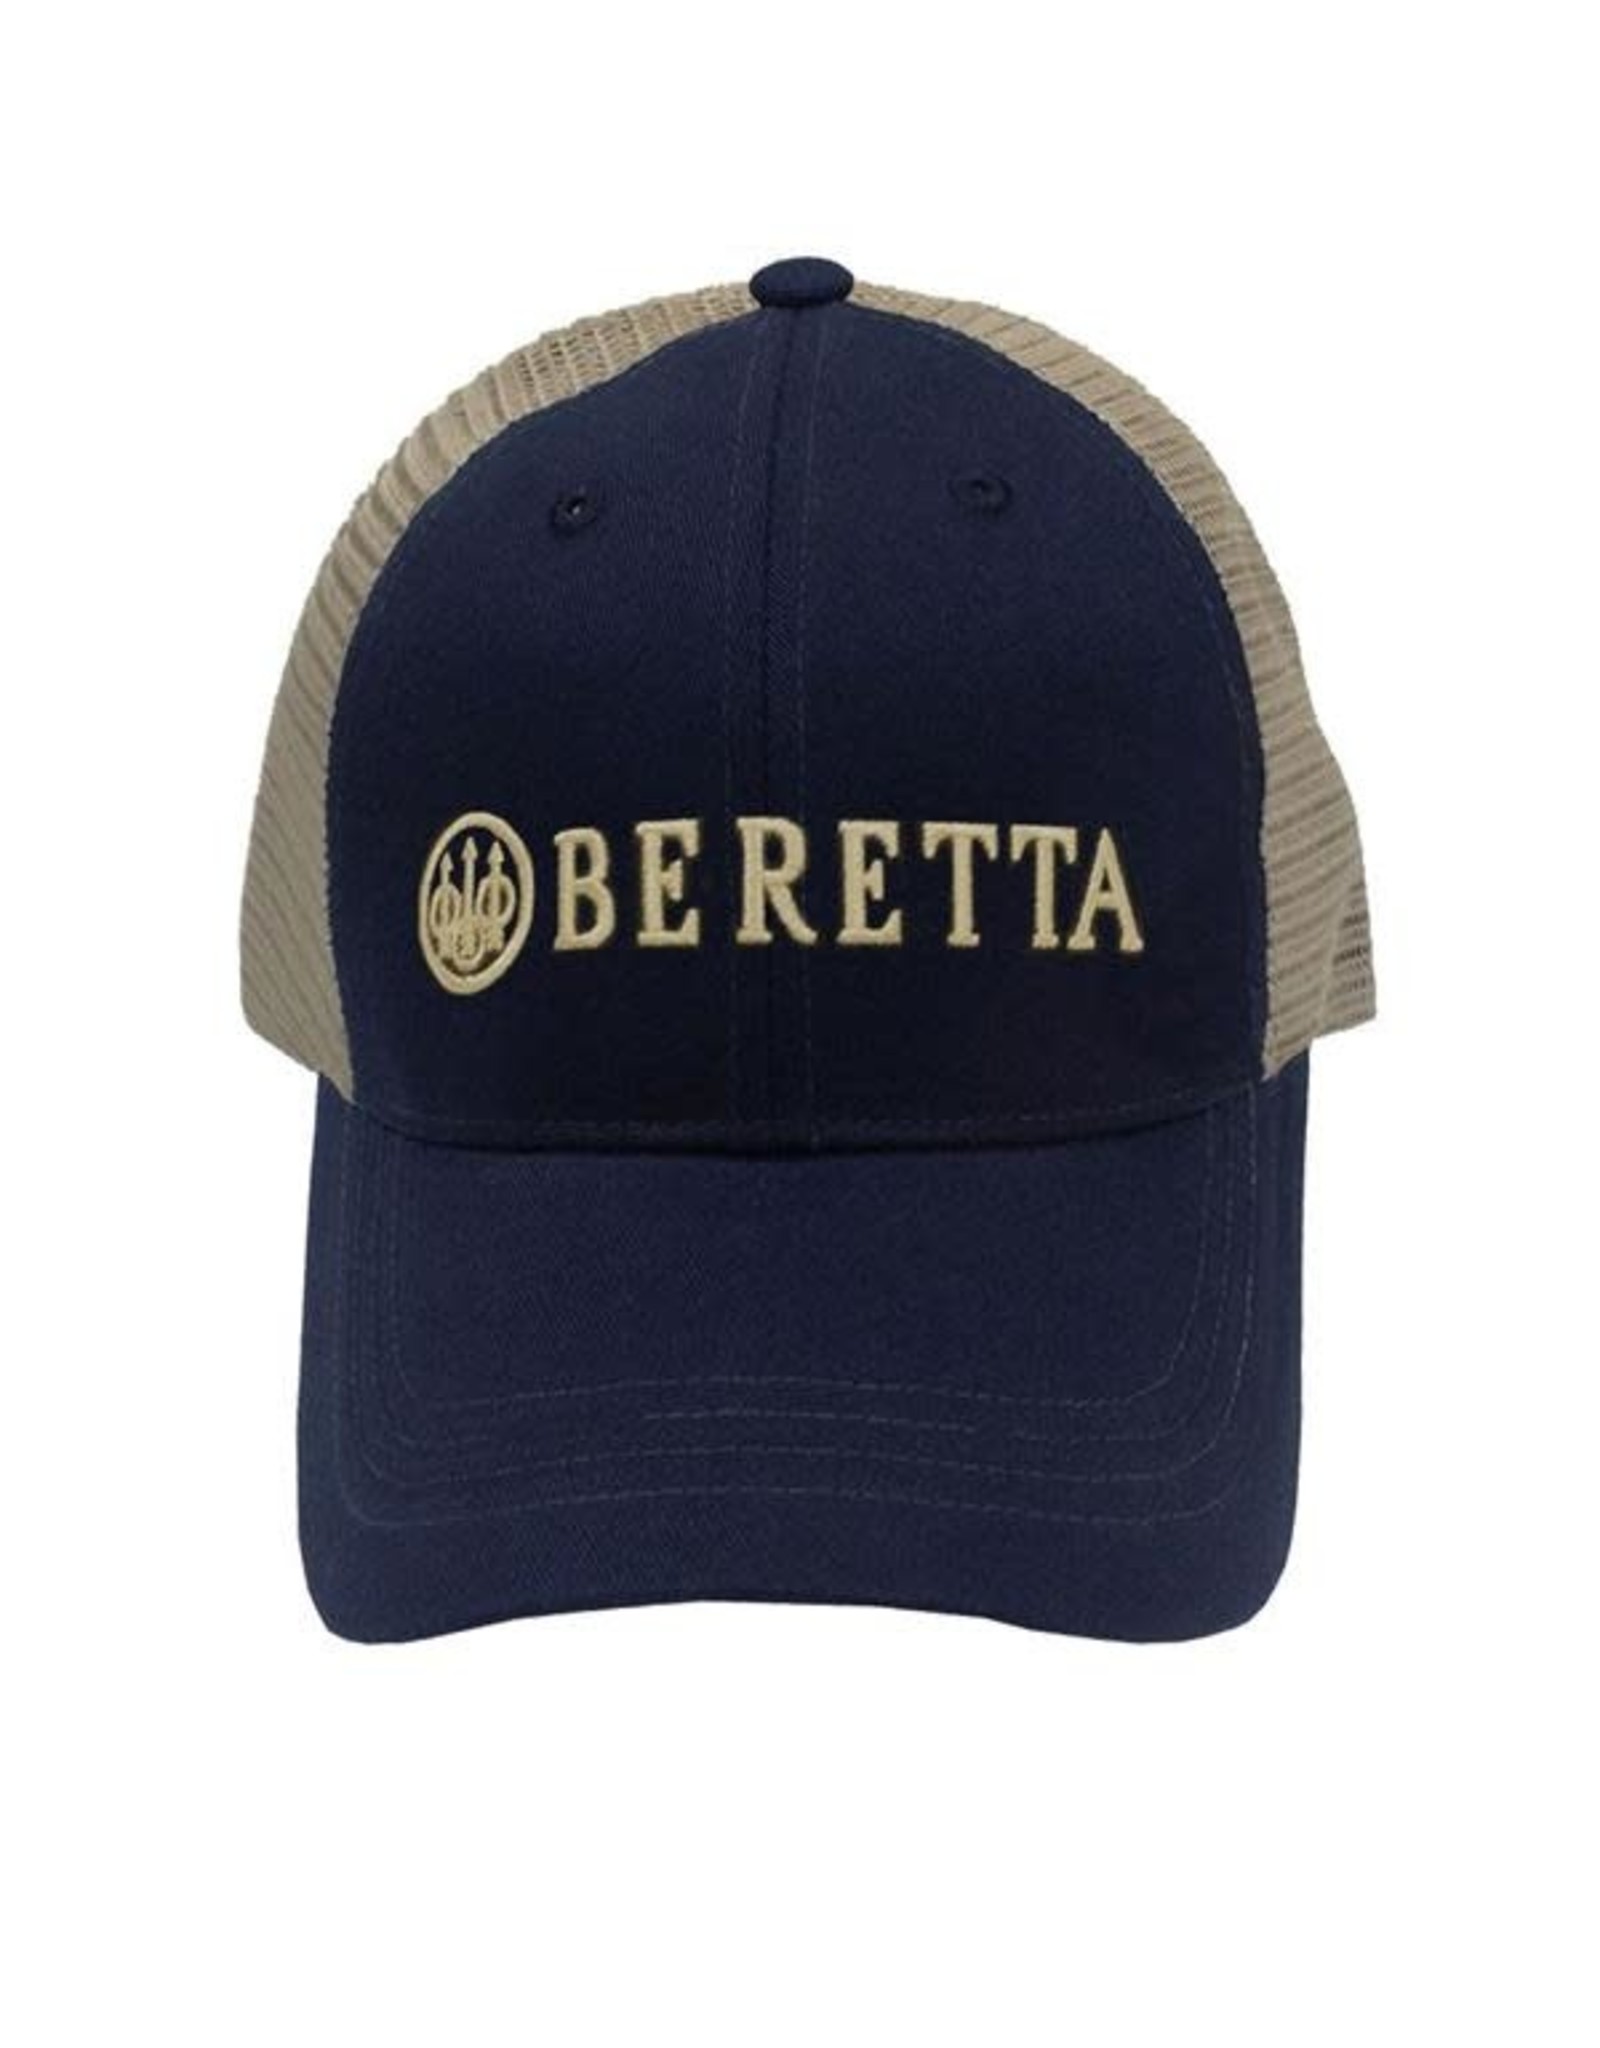 Beretta Beretta LP Trucker Hat Navy with Mesh One Size